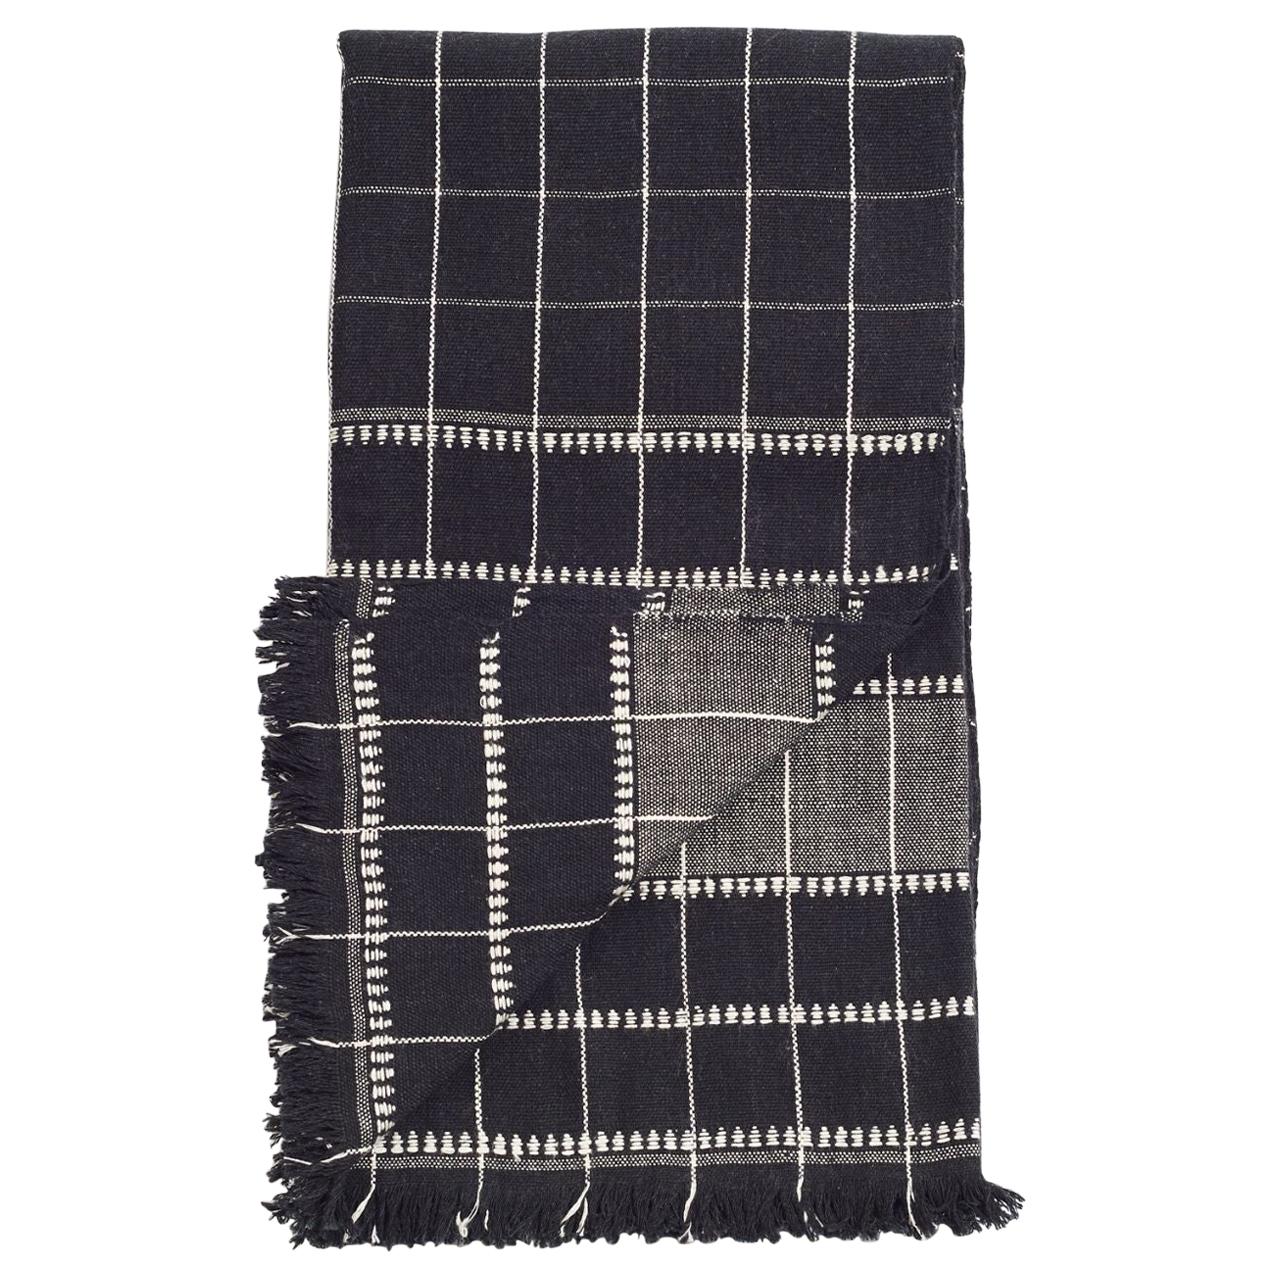 Charco  Handloom Throw / Blanket , Charcoal Black Organic Cotton Checks Pattern 